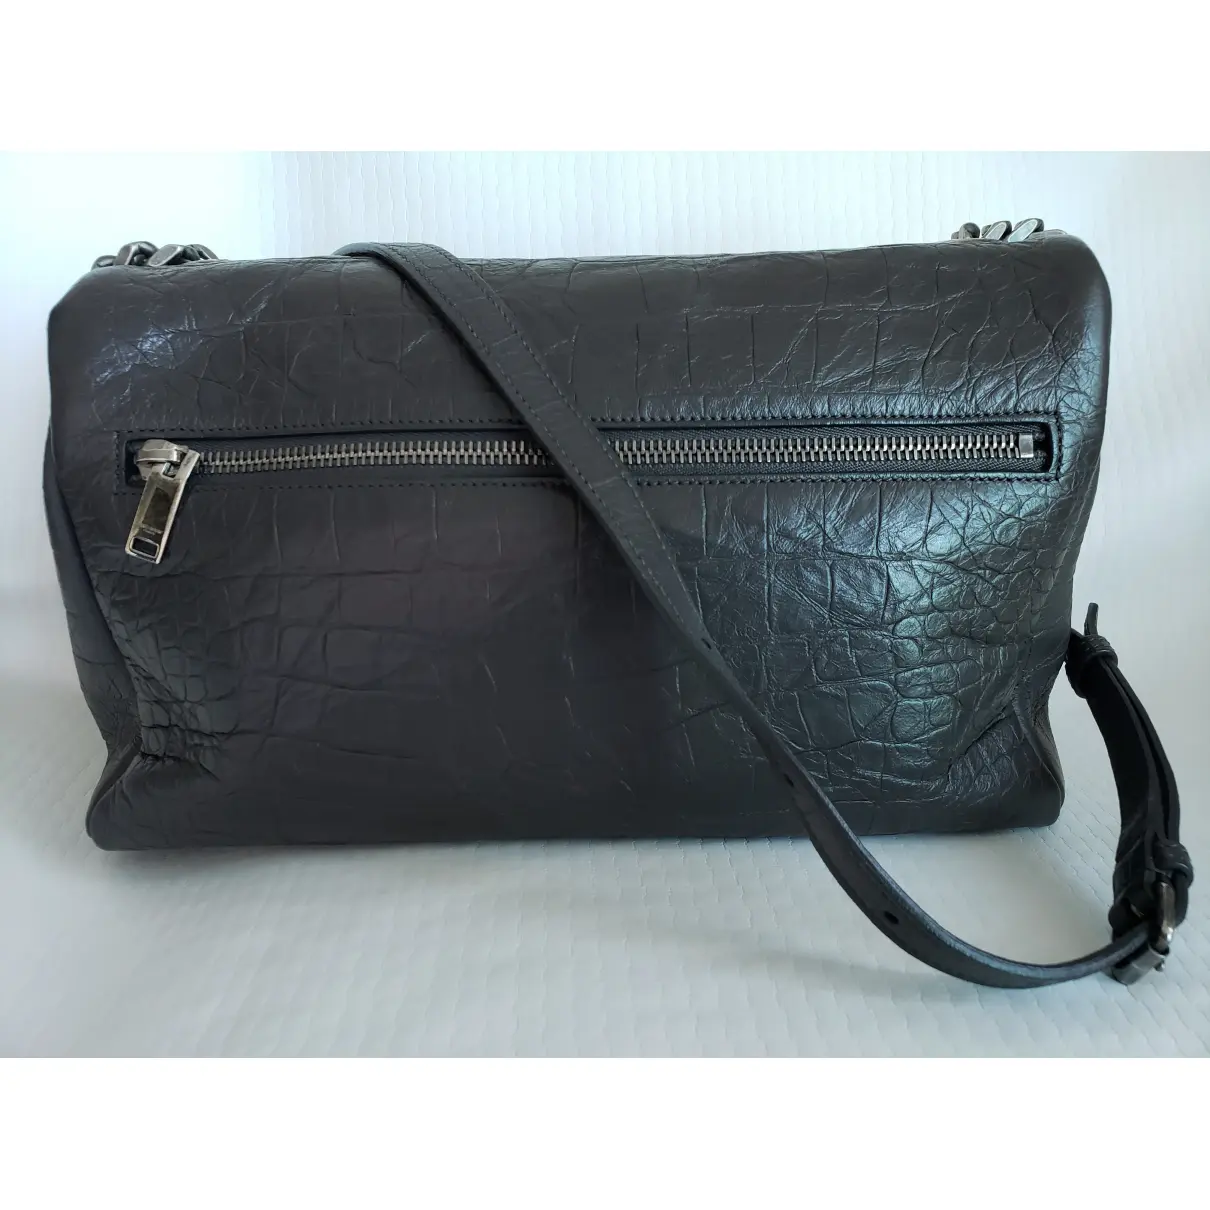 Buy Saint Laurent West Hollywood leather handbag online